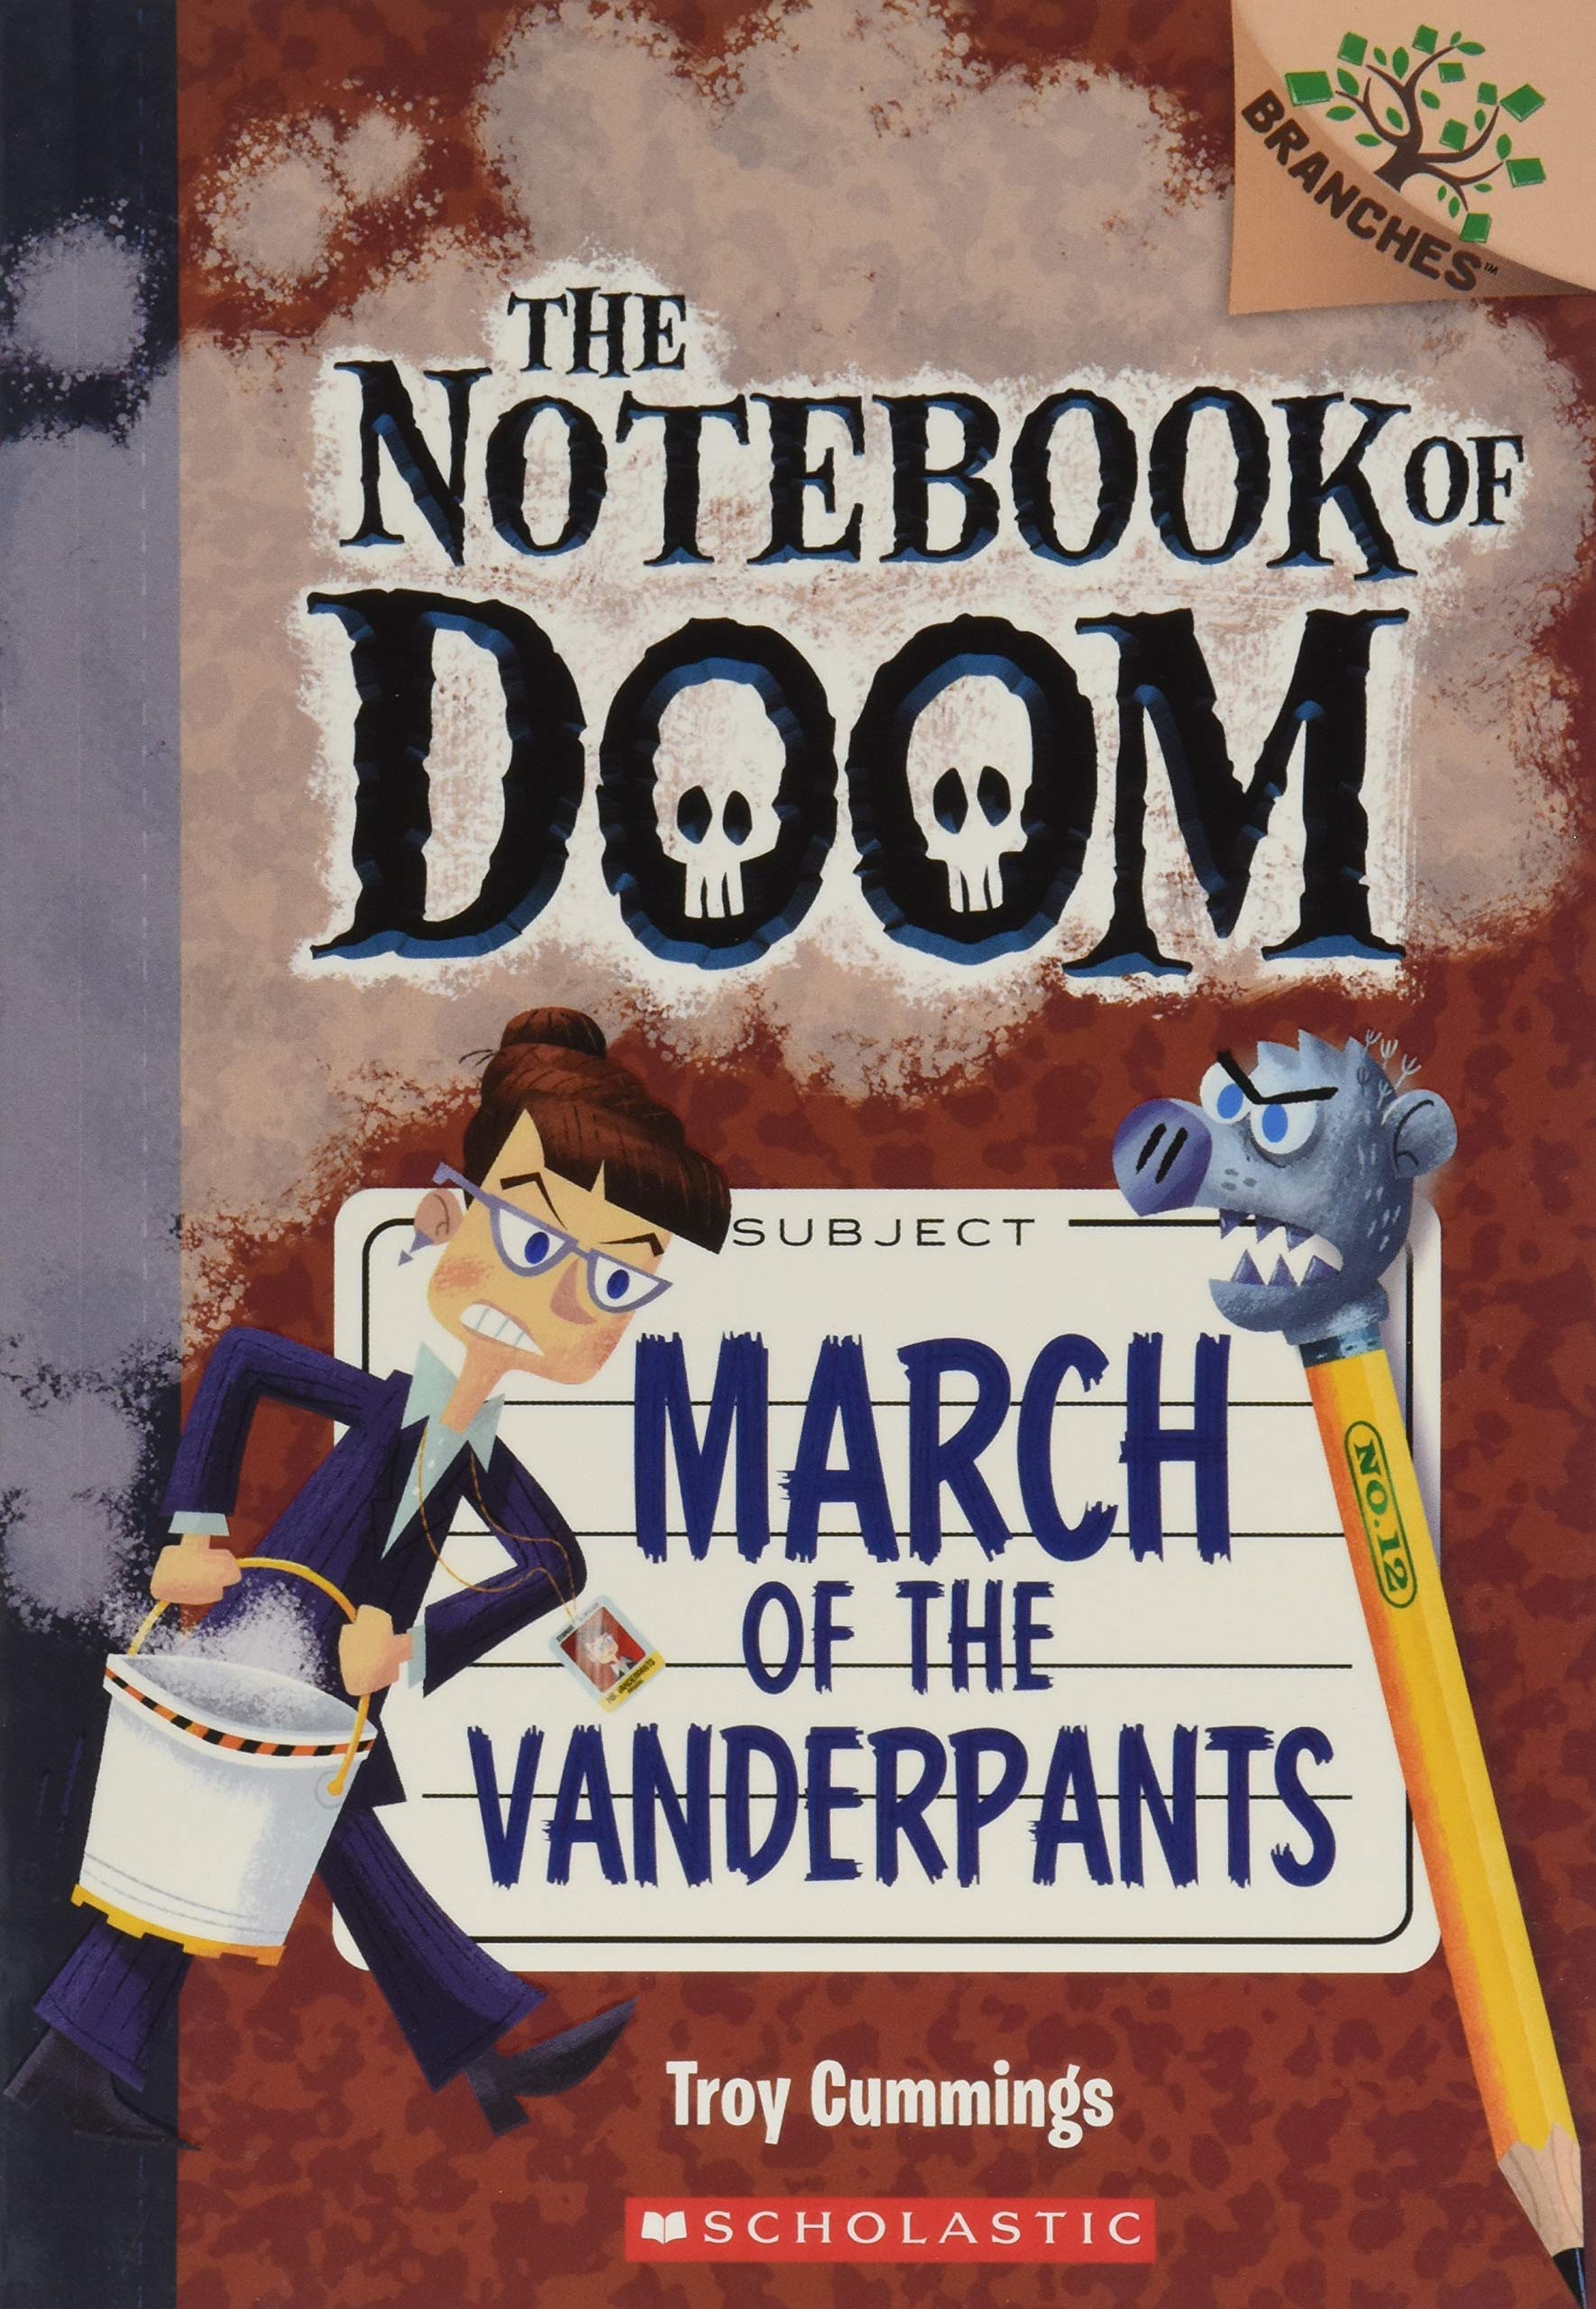 March of the Vanderpants (The Notebook of Doom #12)